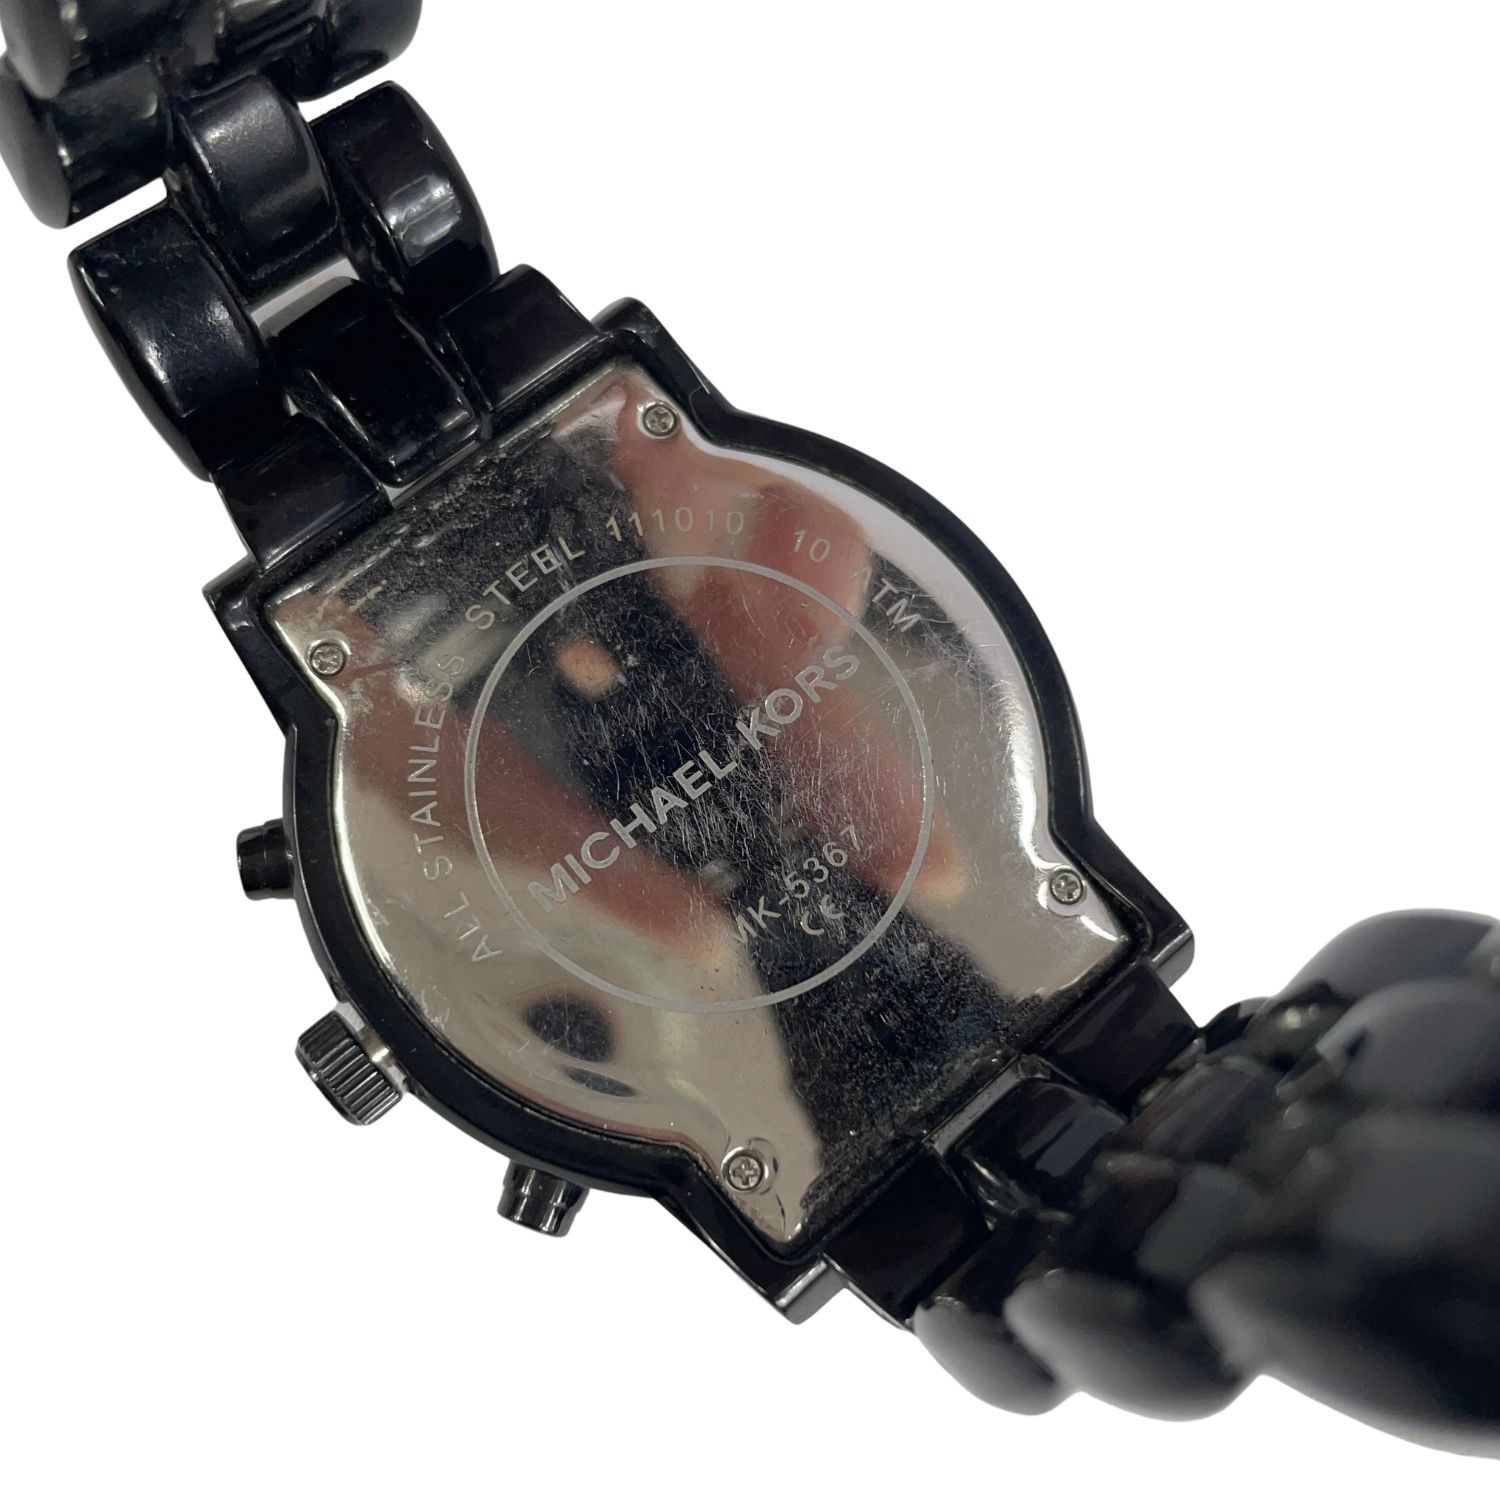 Relógio Michael Kors MK-5367